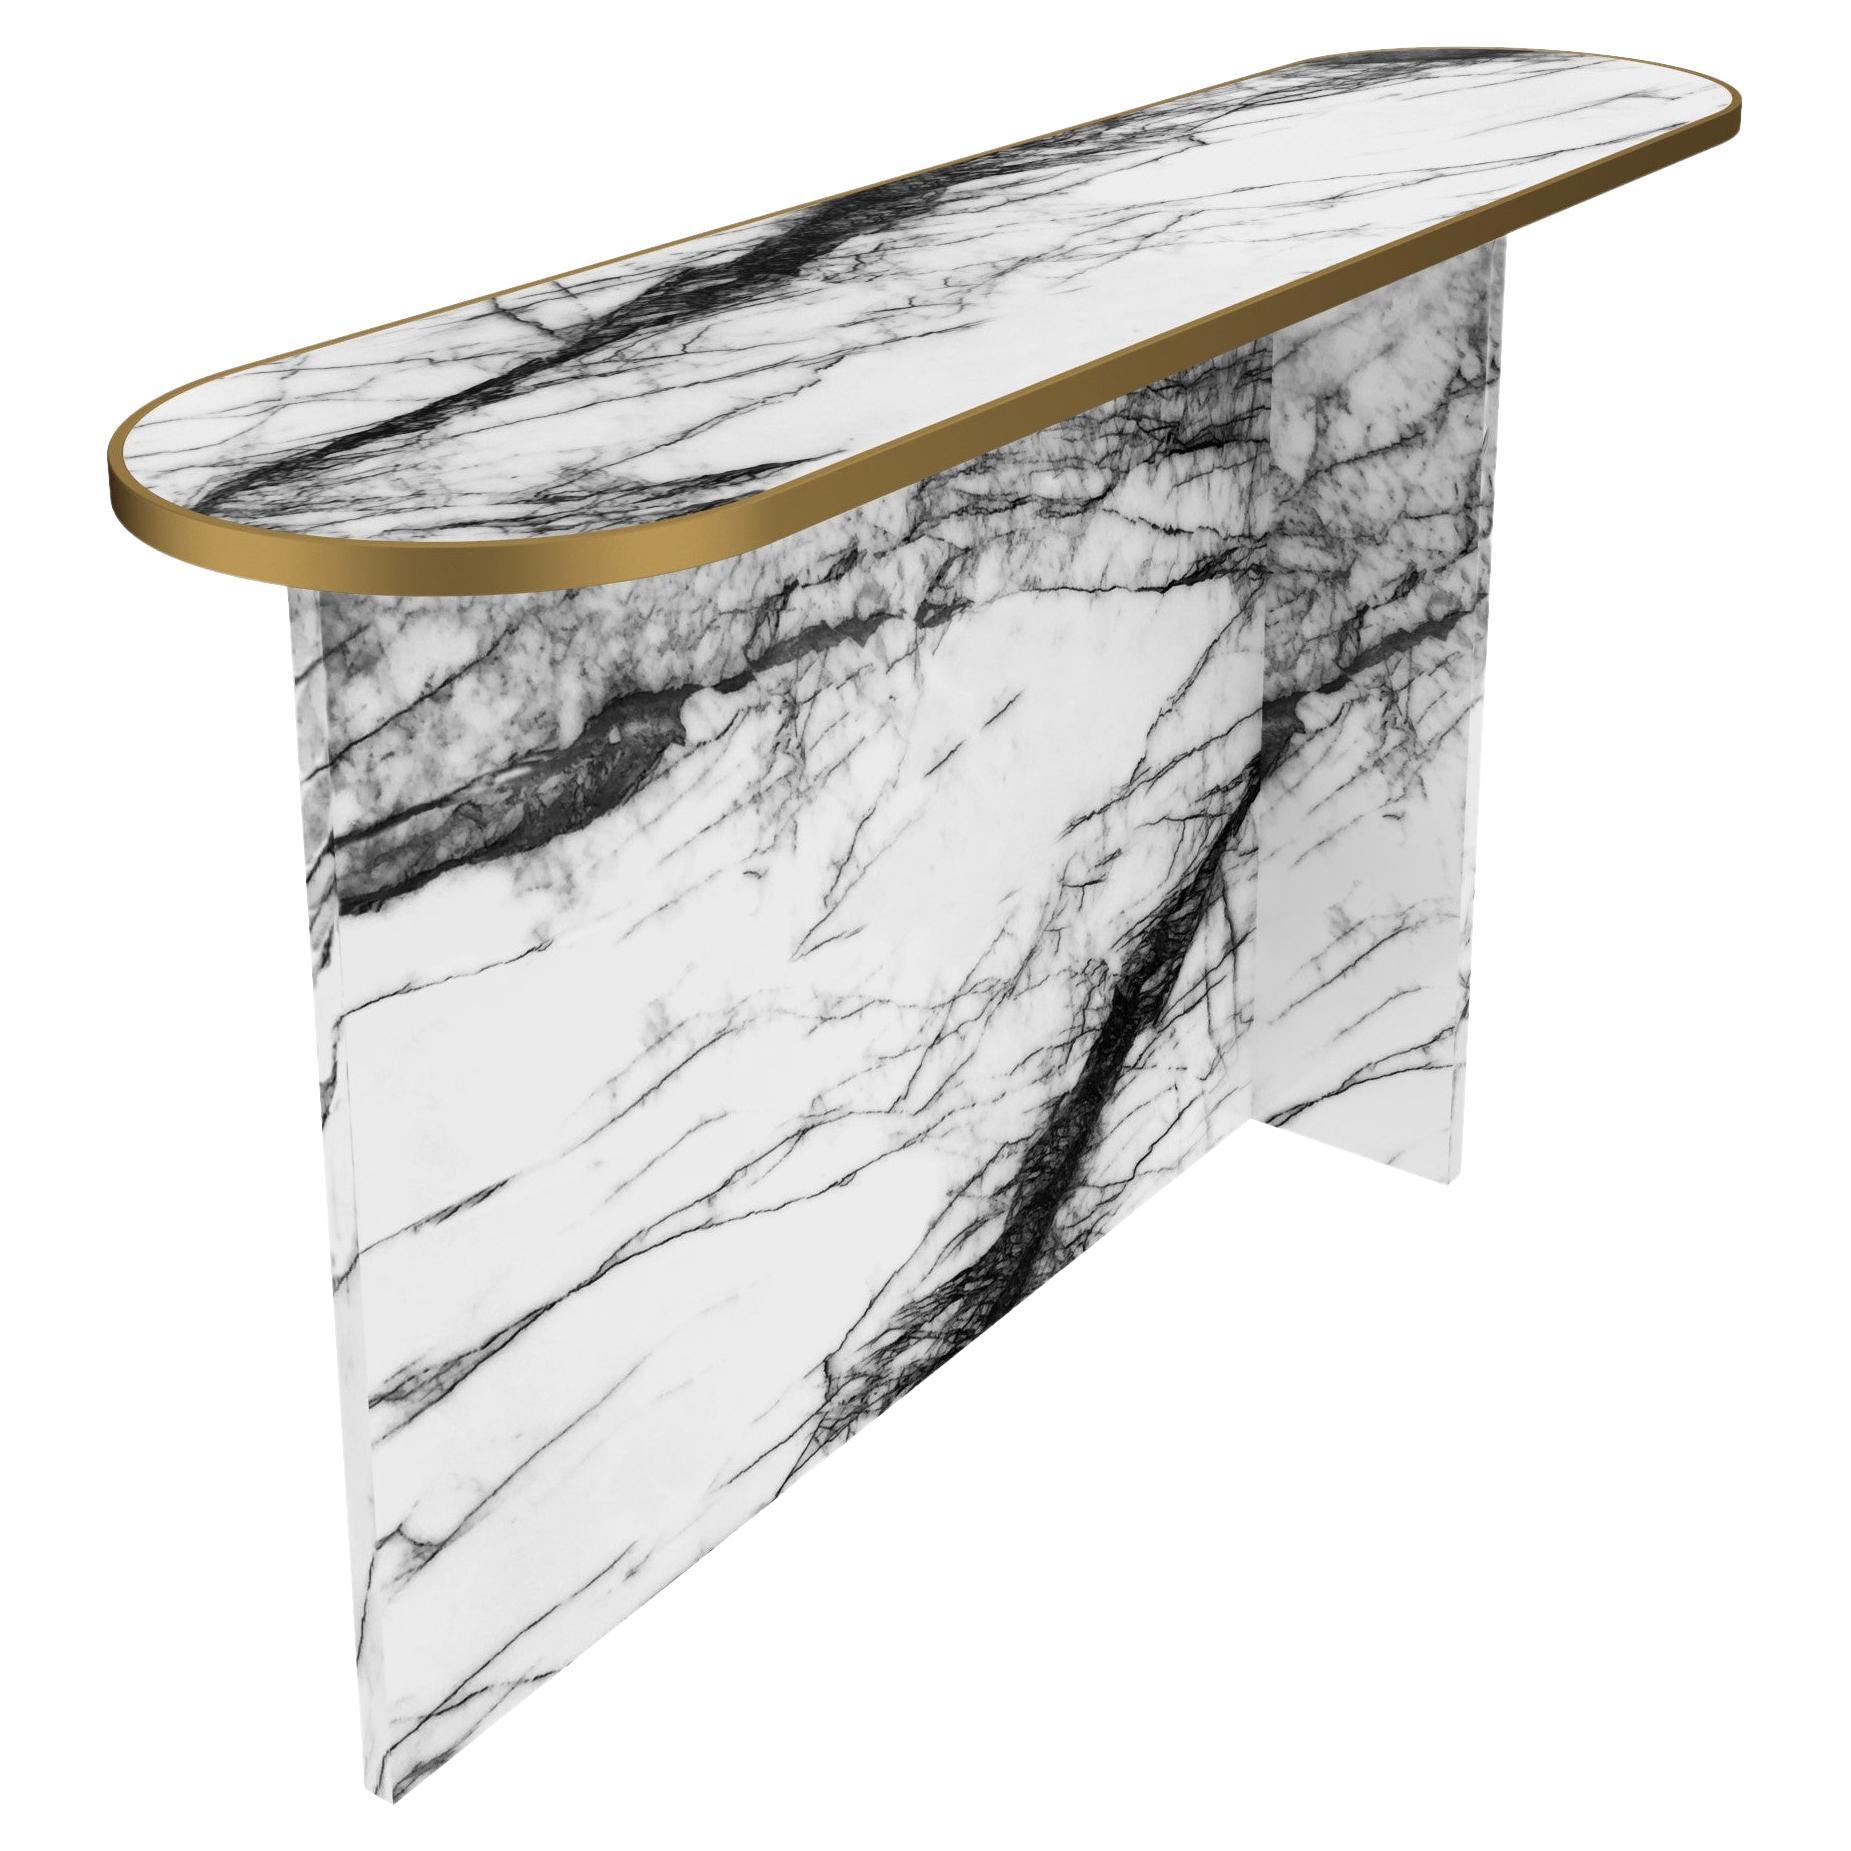 NORDST T-Large Side Table, Italian White Mountain Marble, Danish Modern Design For Sale